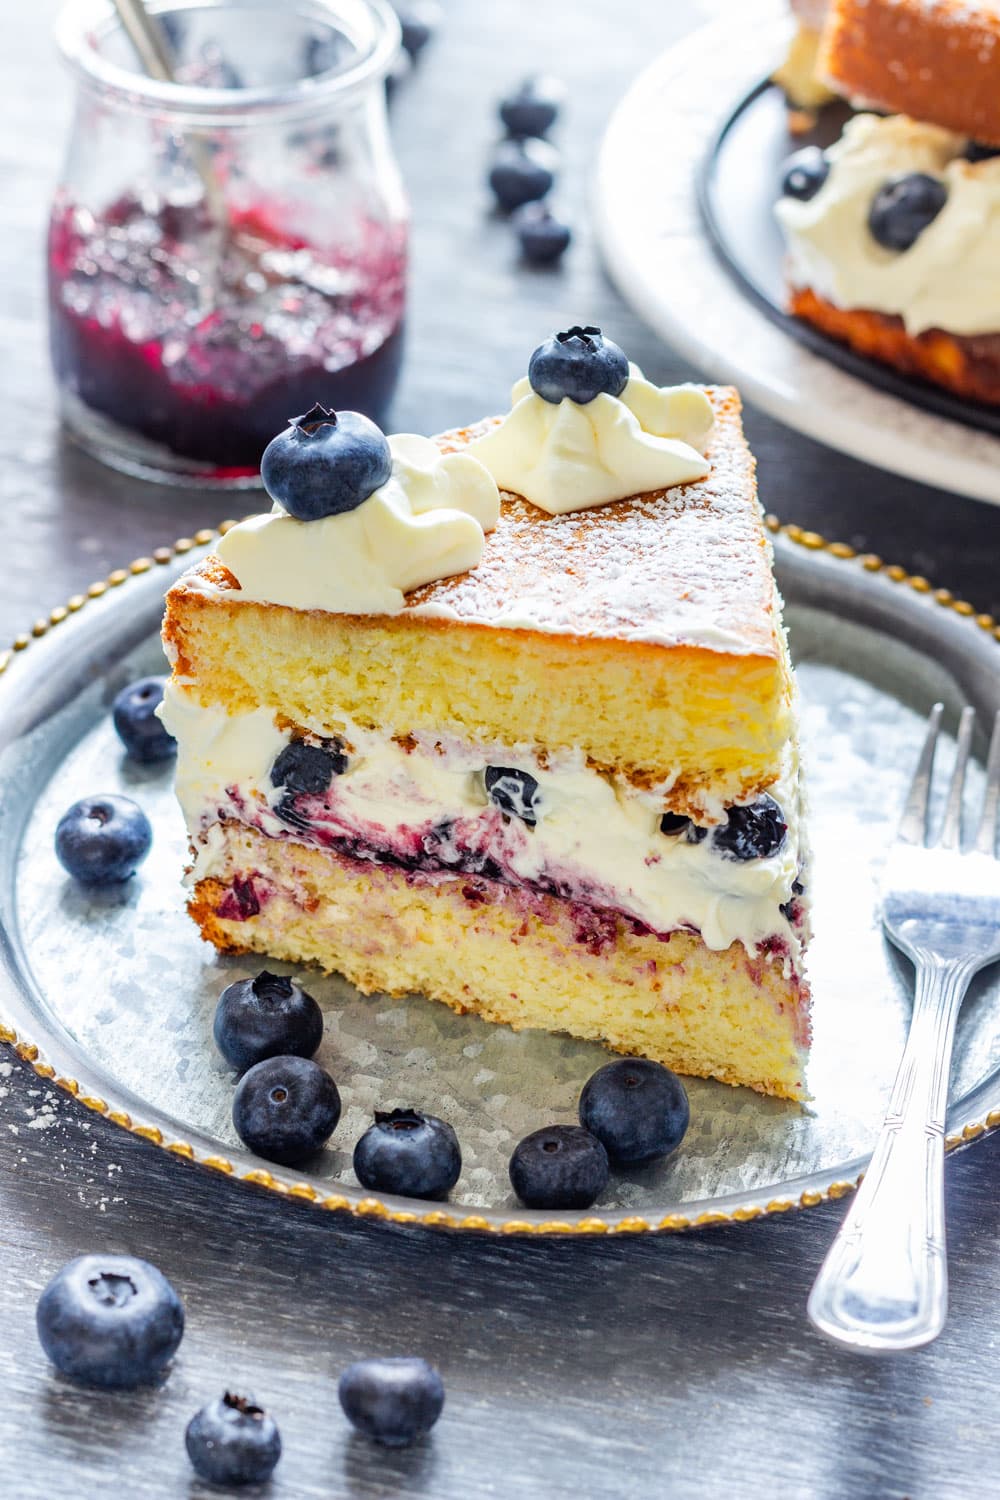 Slice of blueberry cream cake with fresh berries.